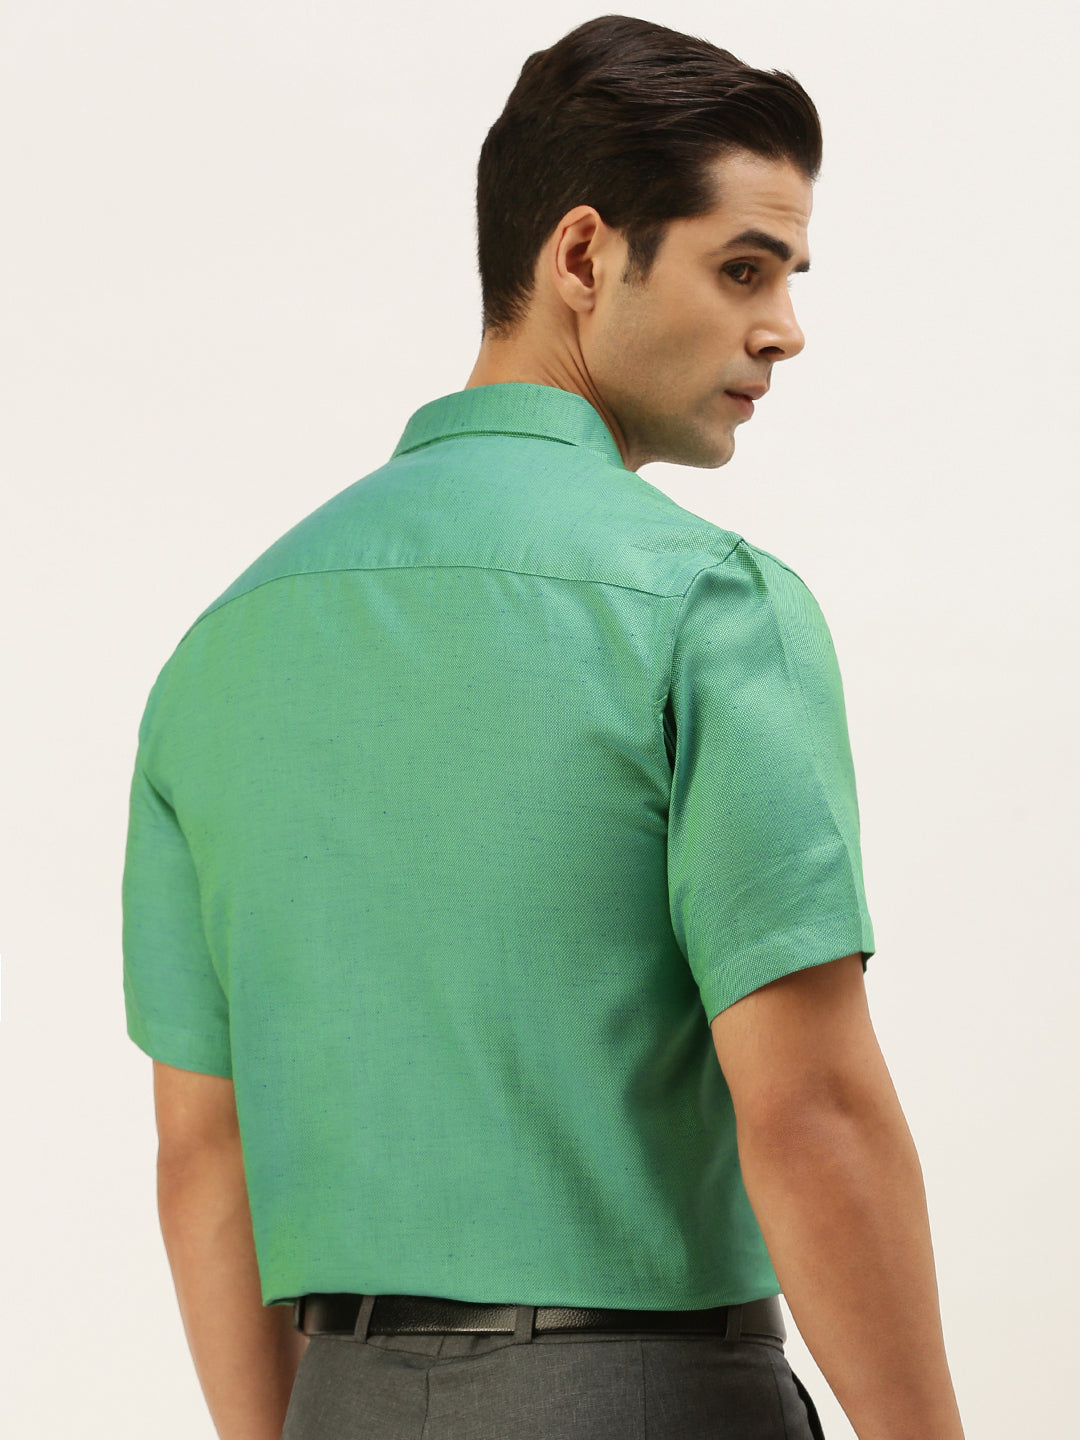 Mens Formal Shirt Half Sleeves Green CY10-Side view